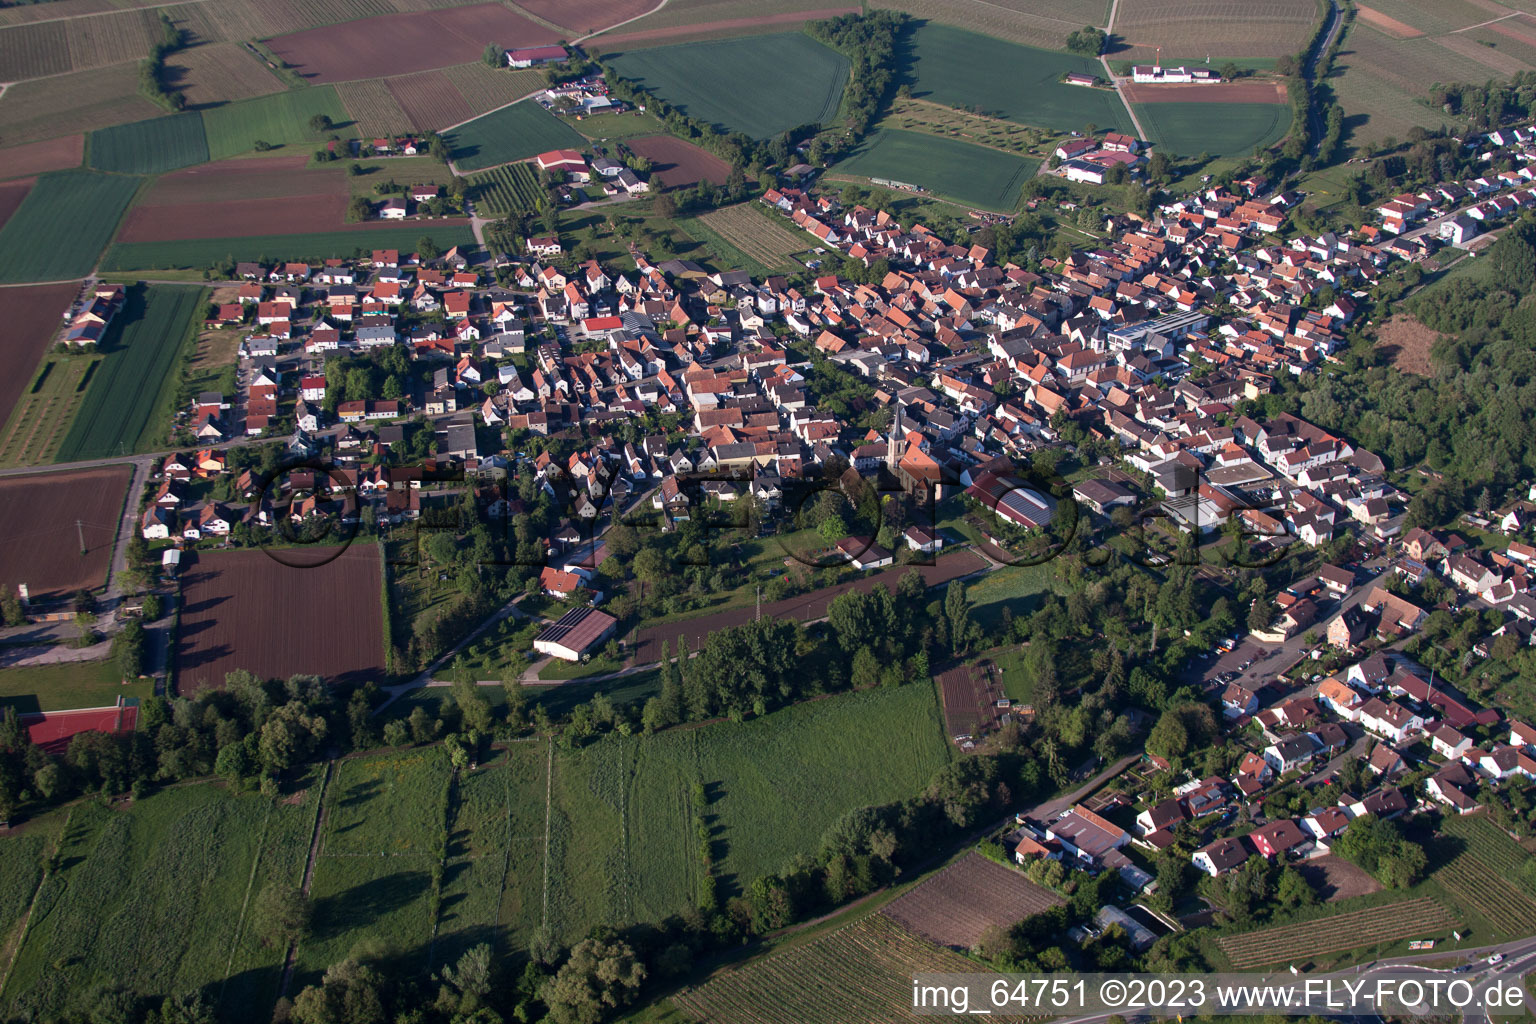 Quartier Billigheim in Billigheim-Ingenheim dans le département Rhénanie-Palatinat, Allemagne vue d'en haut